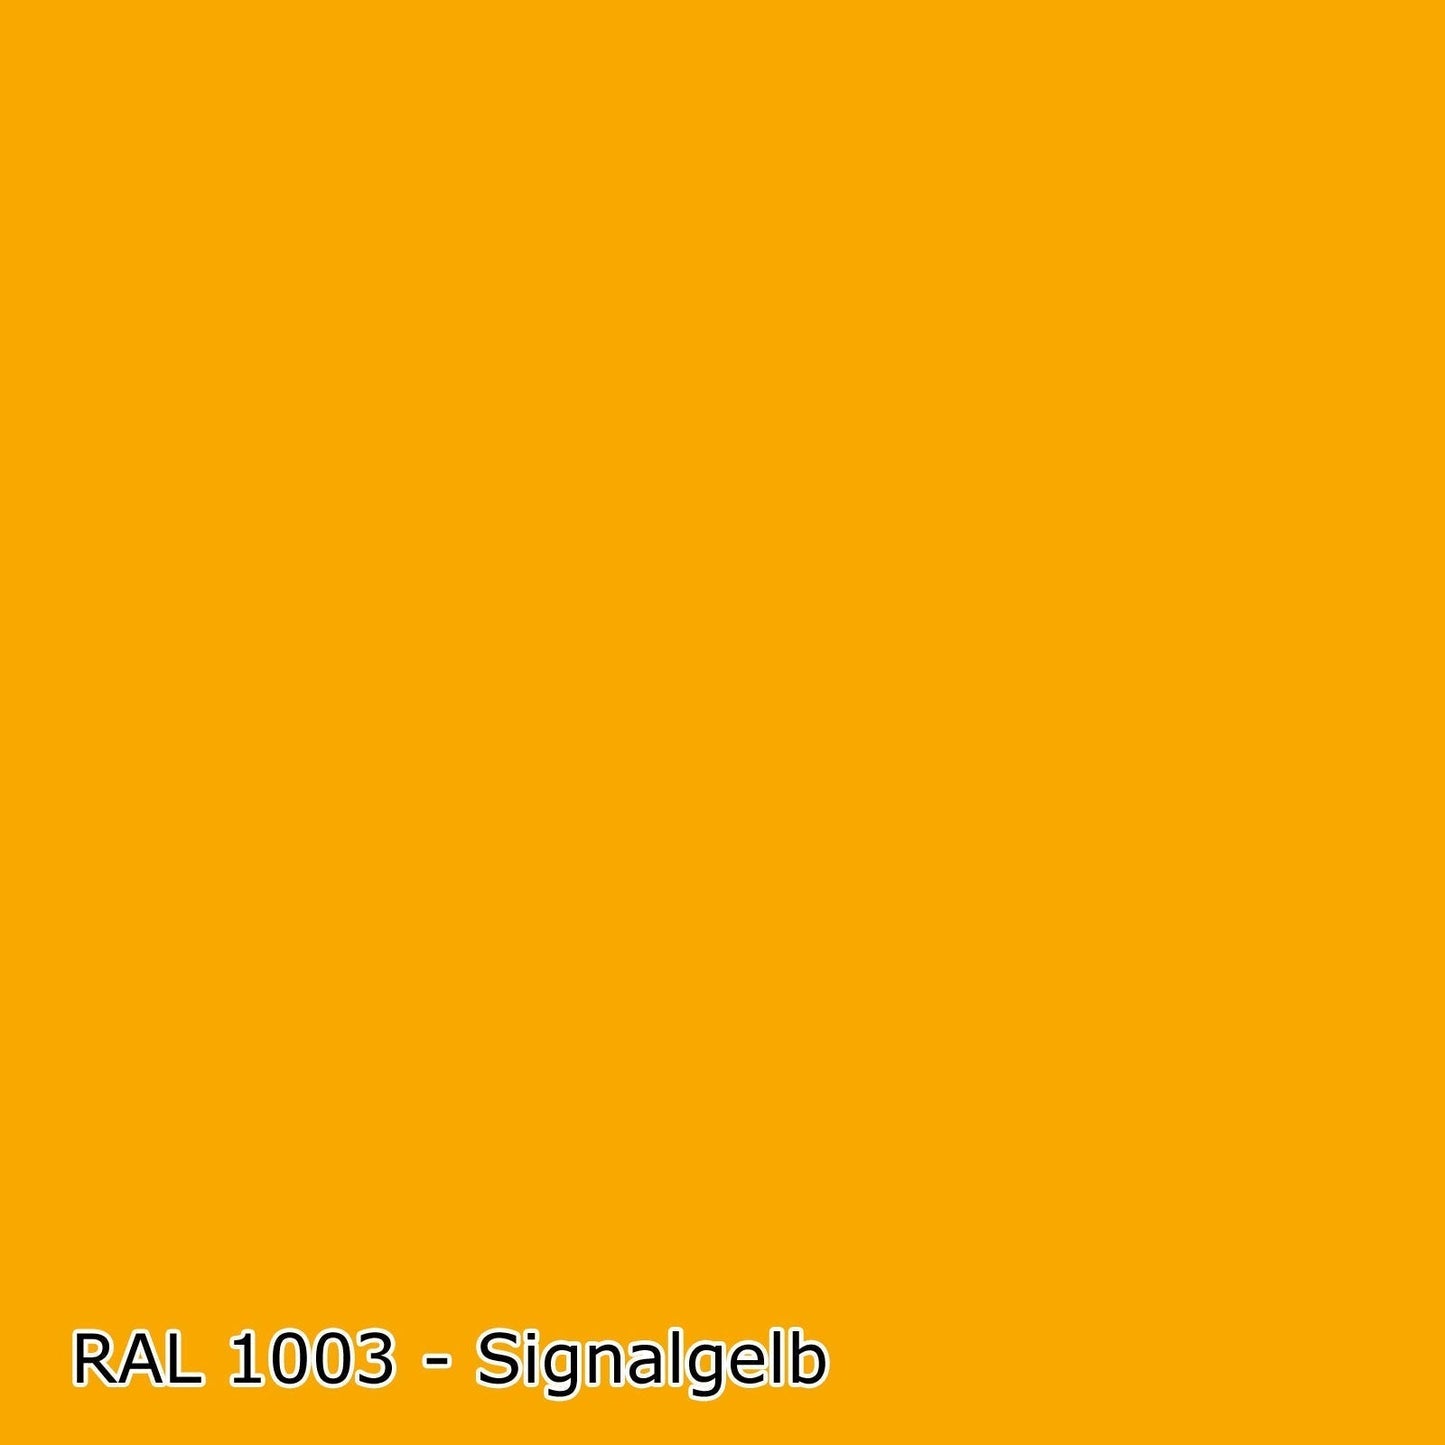 1 L Buntlack auf Wasserbasis, RAL Farbwahl - SEIDENGLANZ (RAL 1000 - 6007)